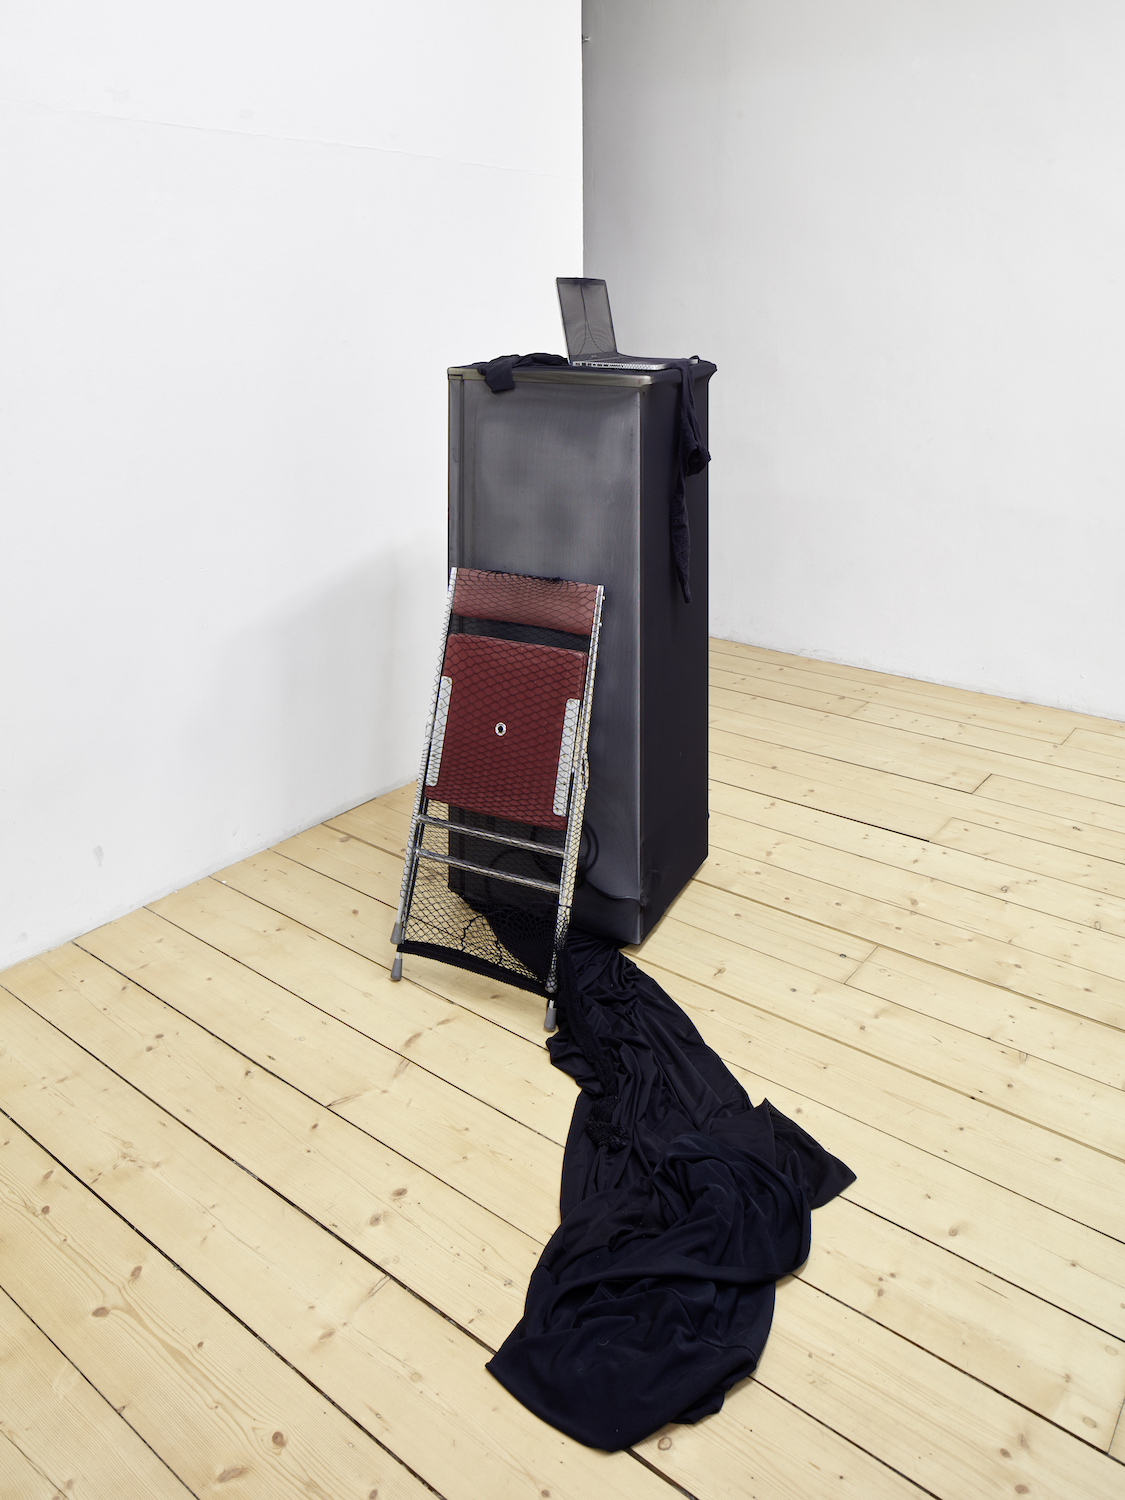 Textile, fridge, stockings, Macbook, chair. Photo by Edward Greiner